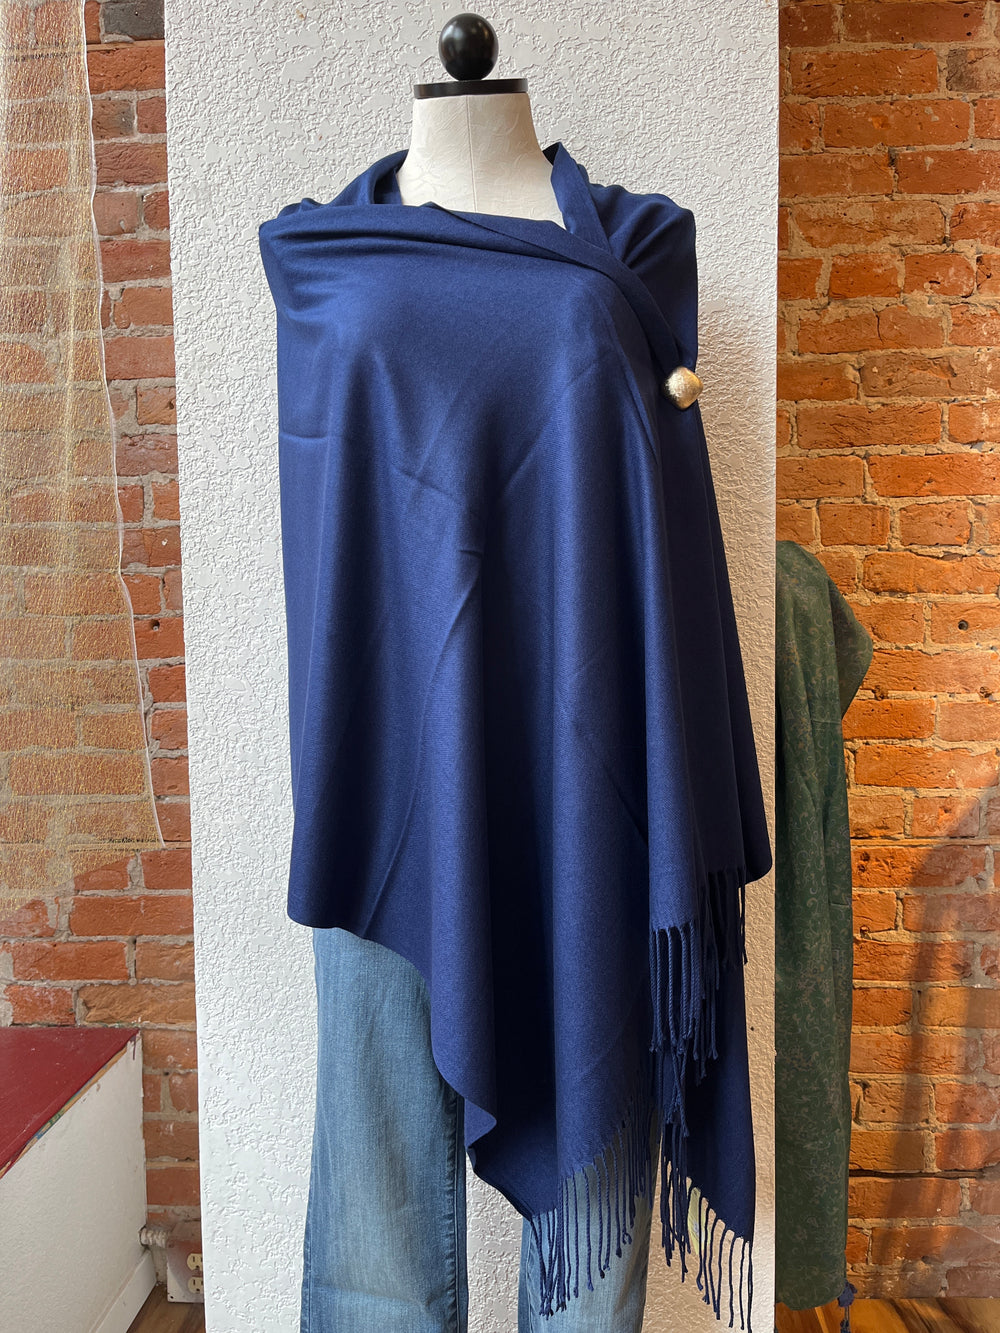 Rapti shawl, cashmere solid colors